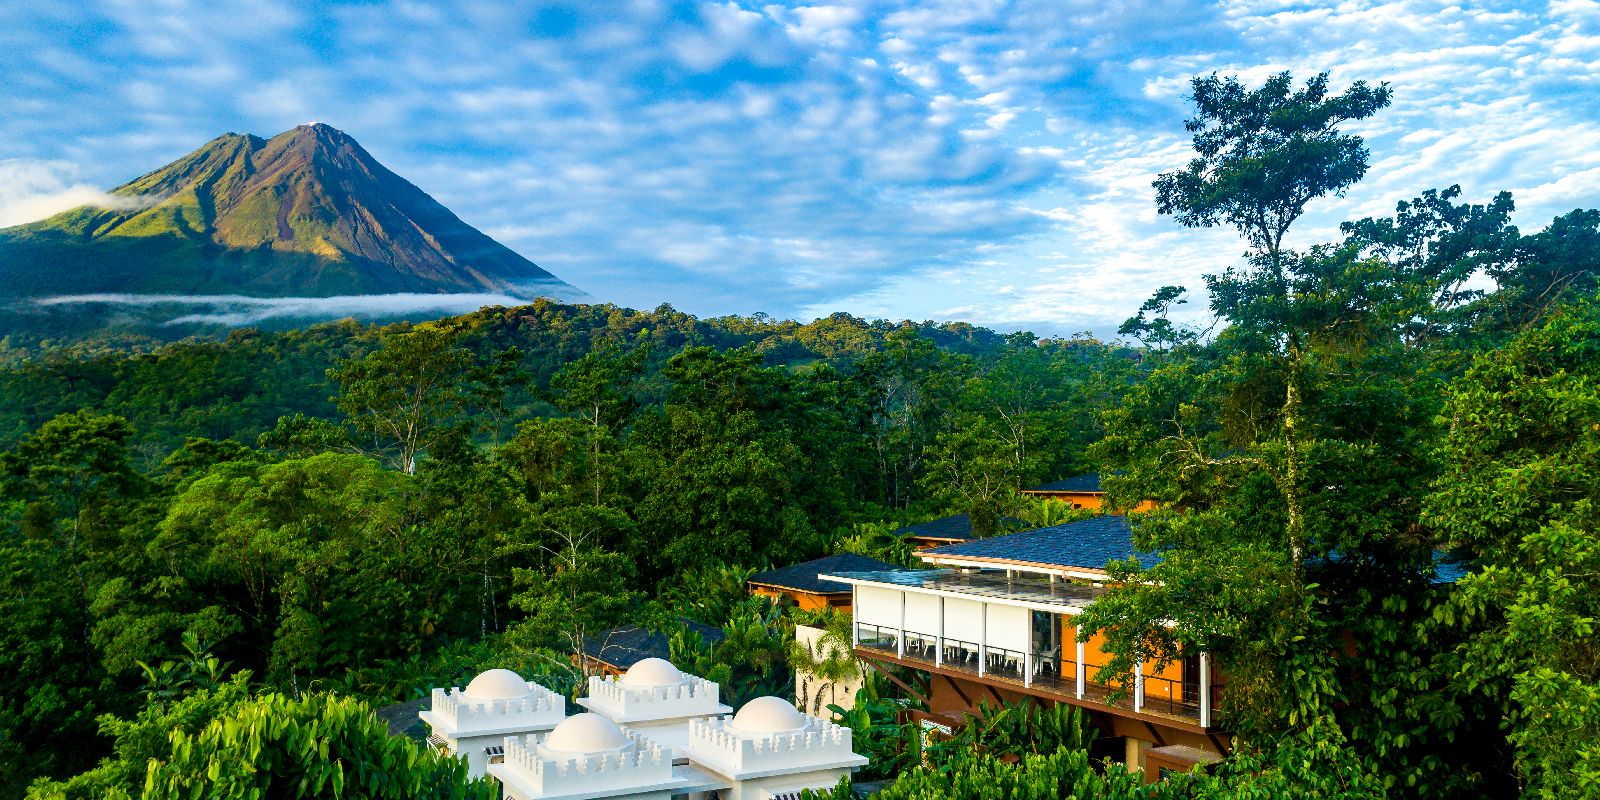 The Nayara Springs resort in Costa Rica vlose to the Arenal Volcano